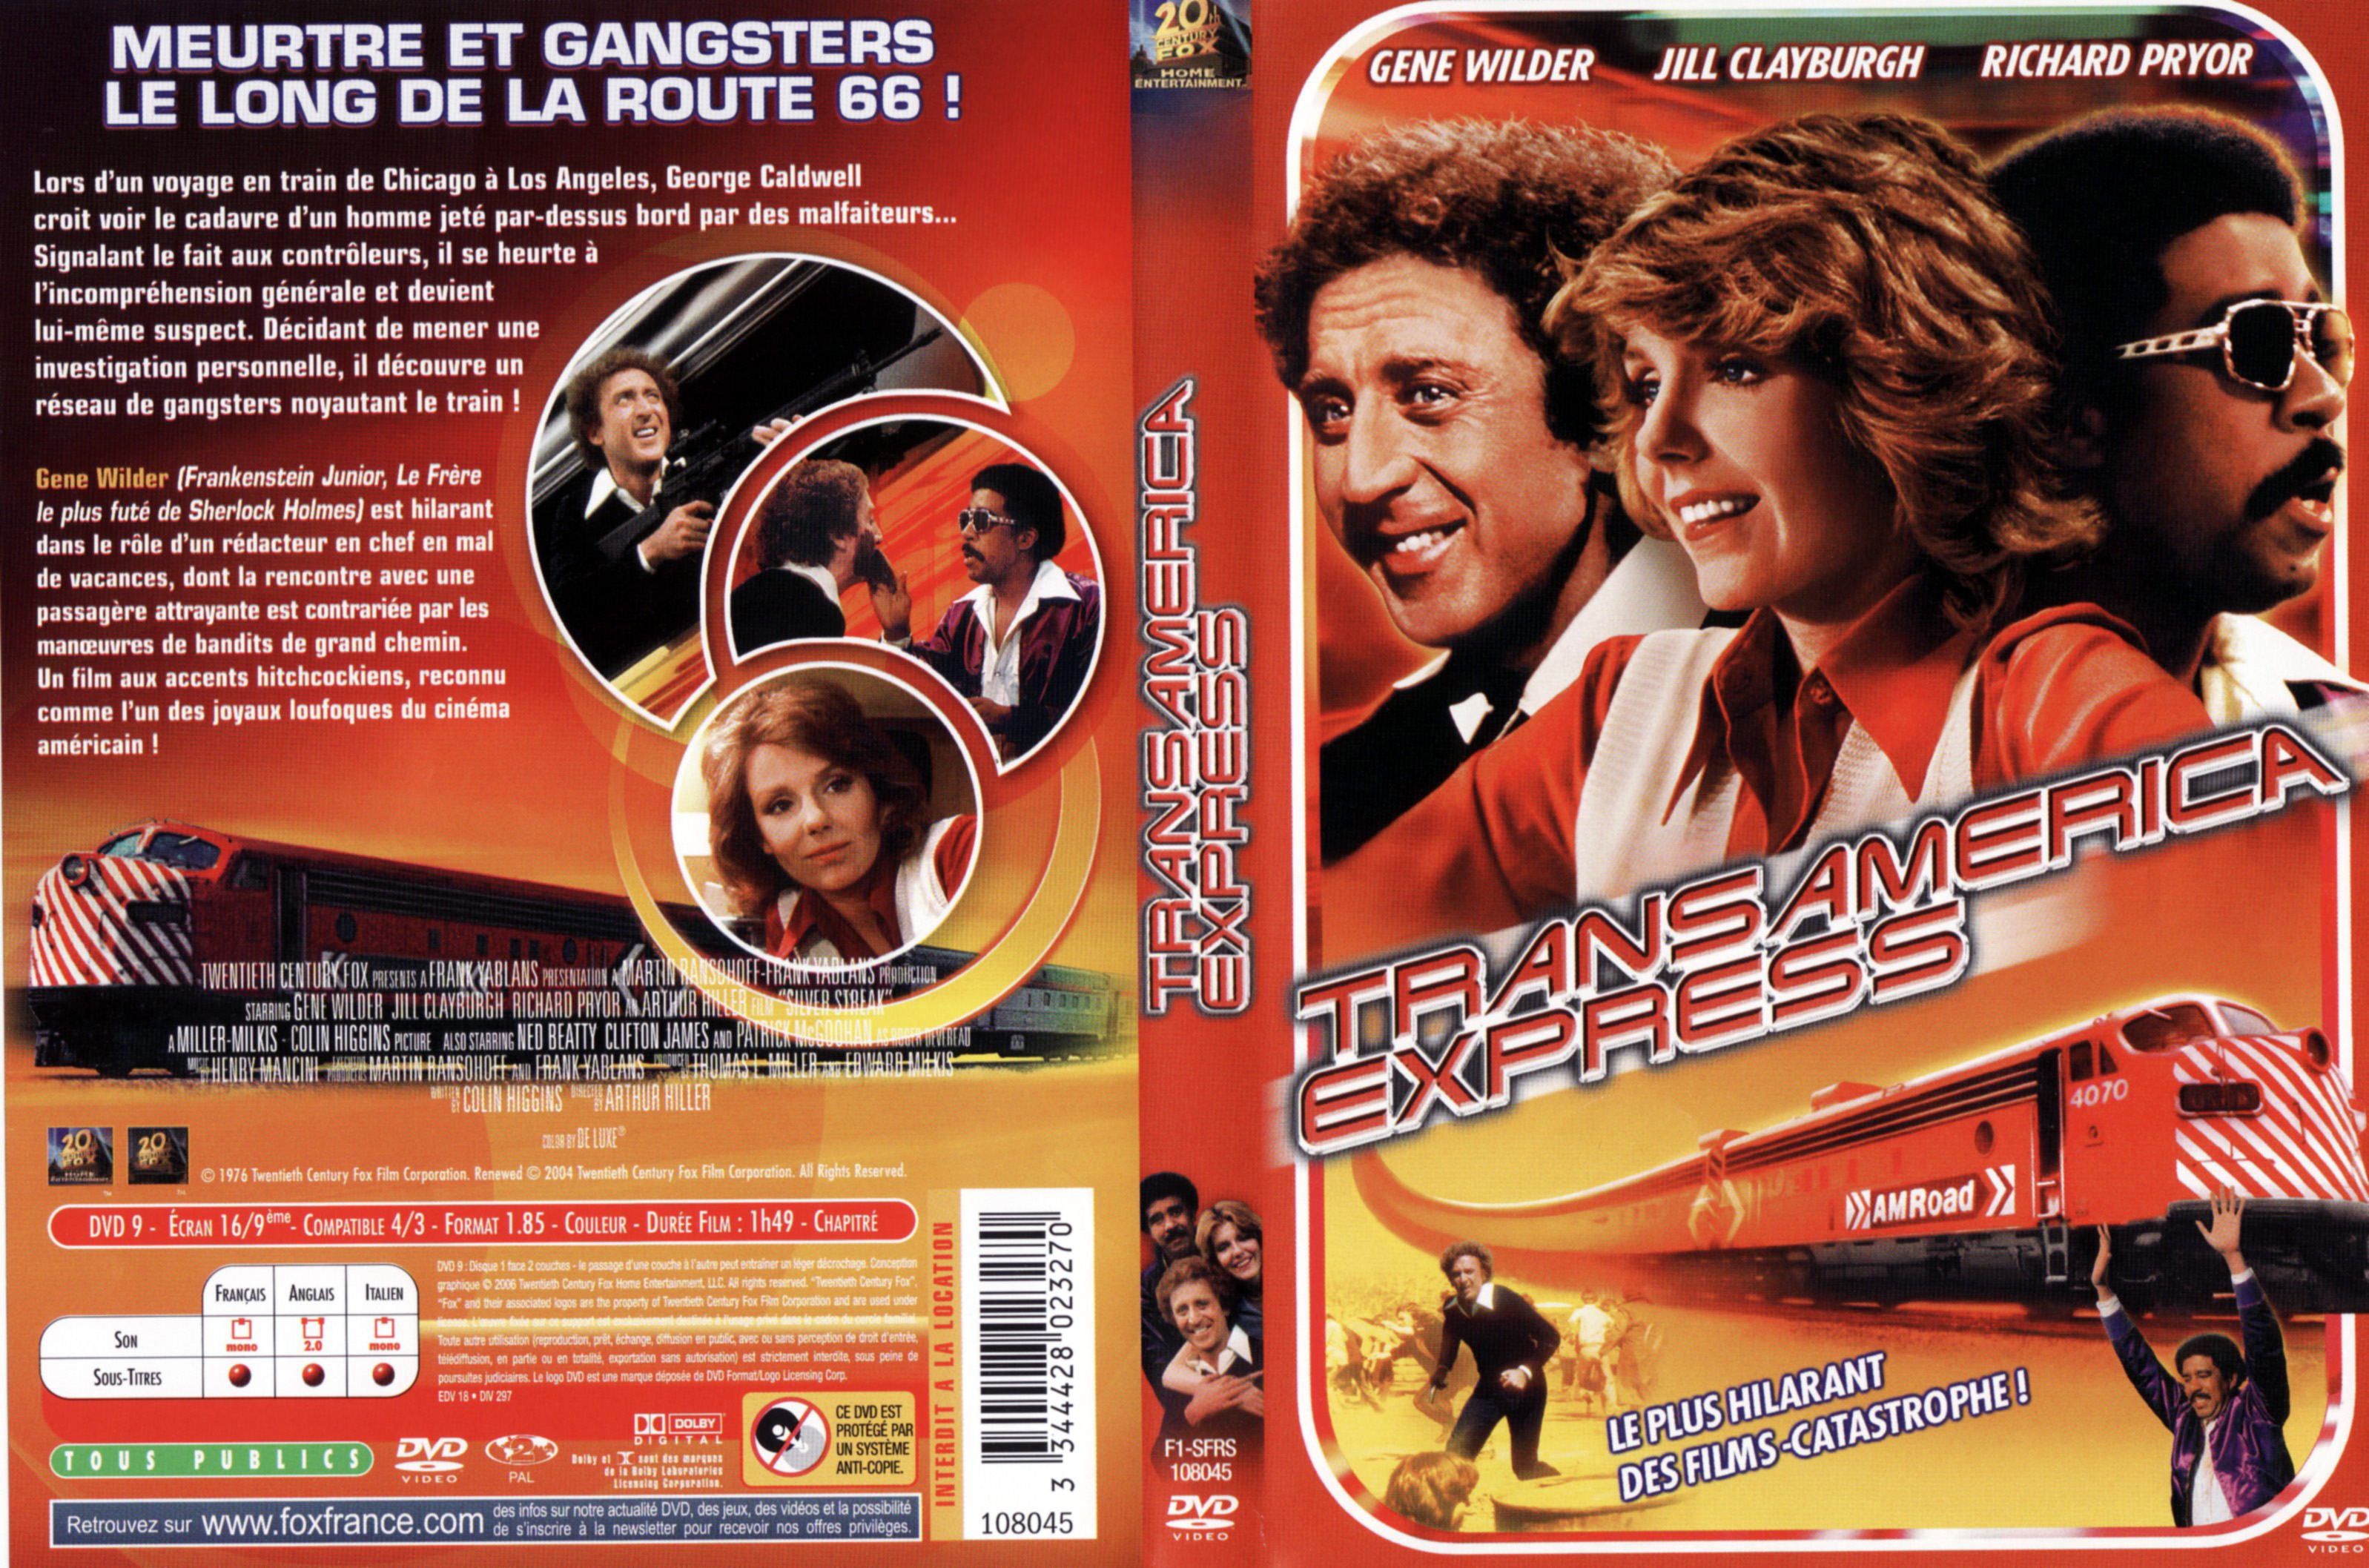 Jaquette DVD Transamerica express